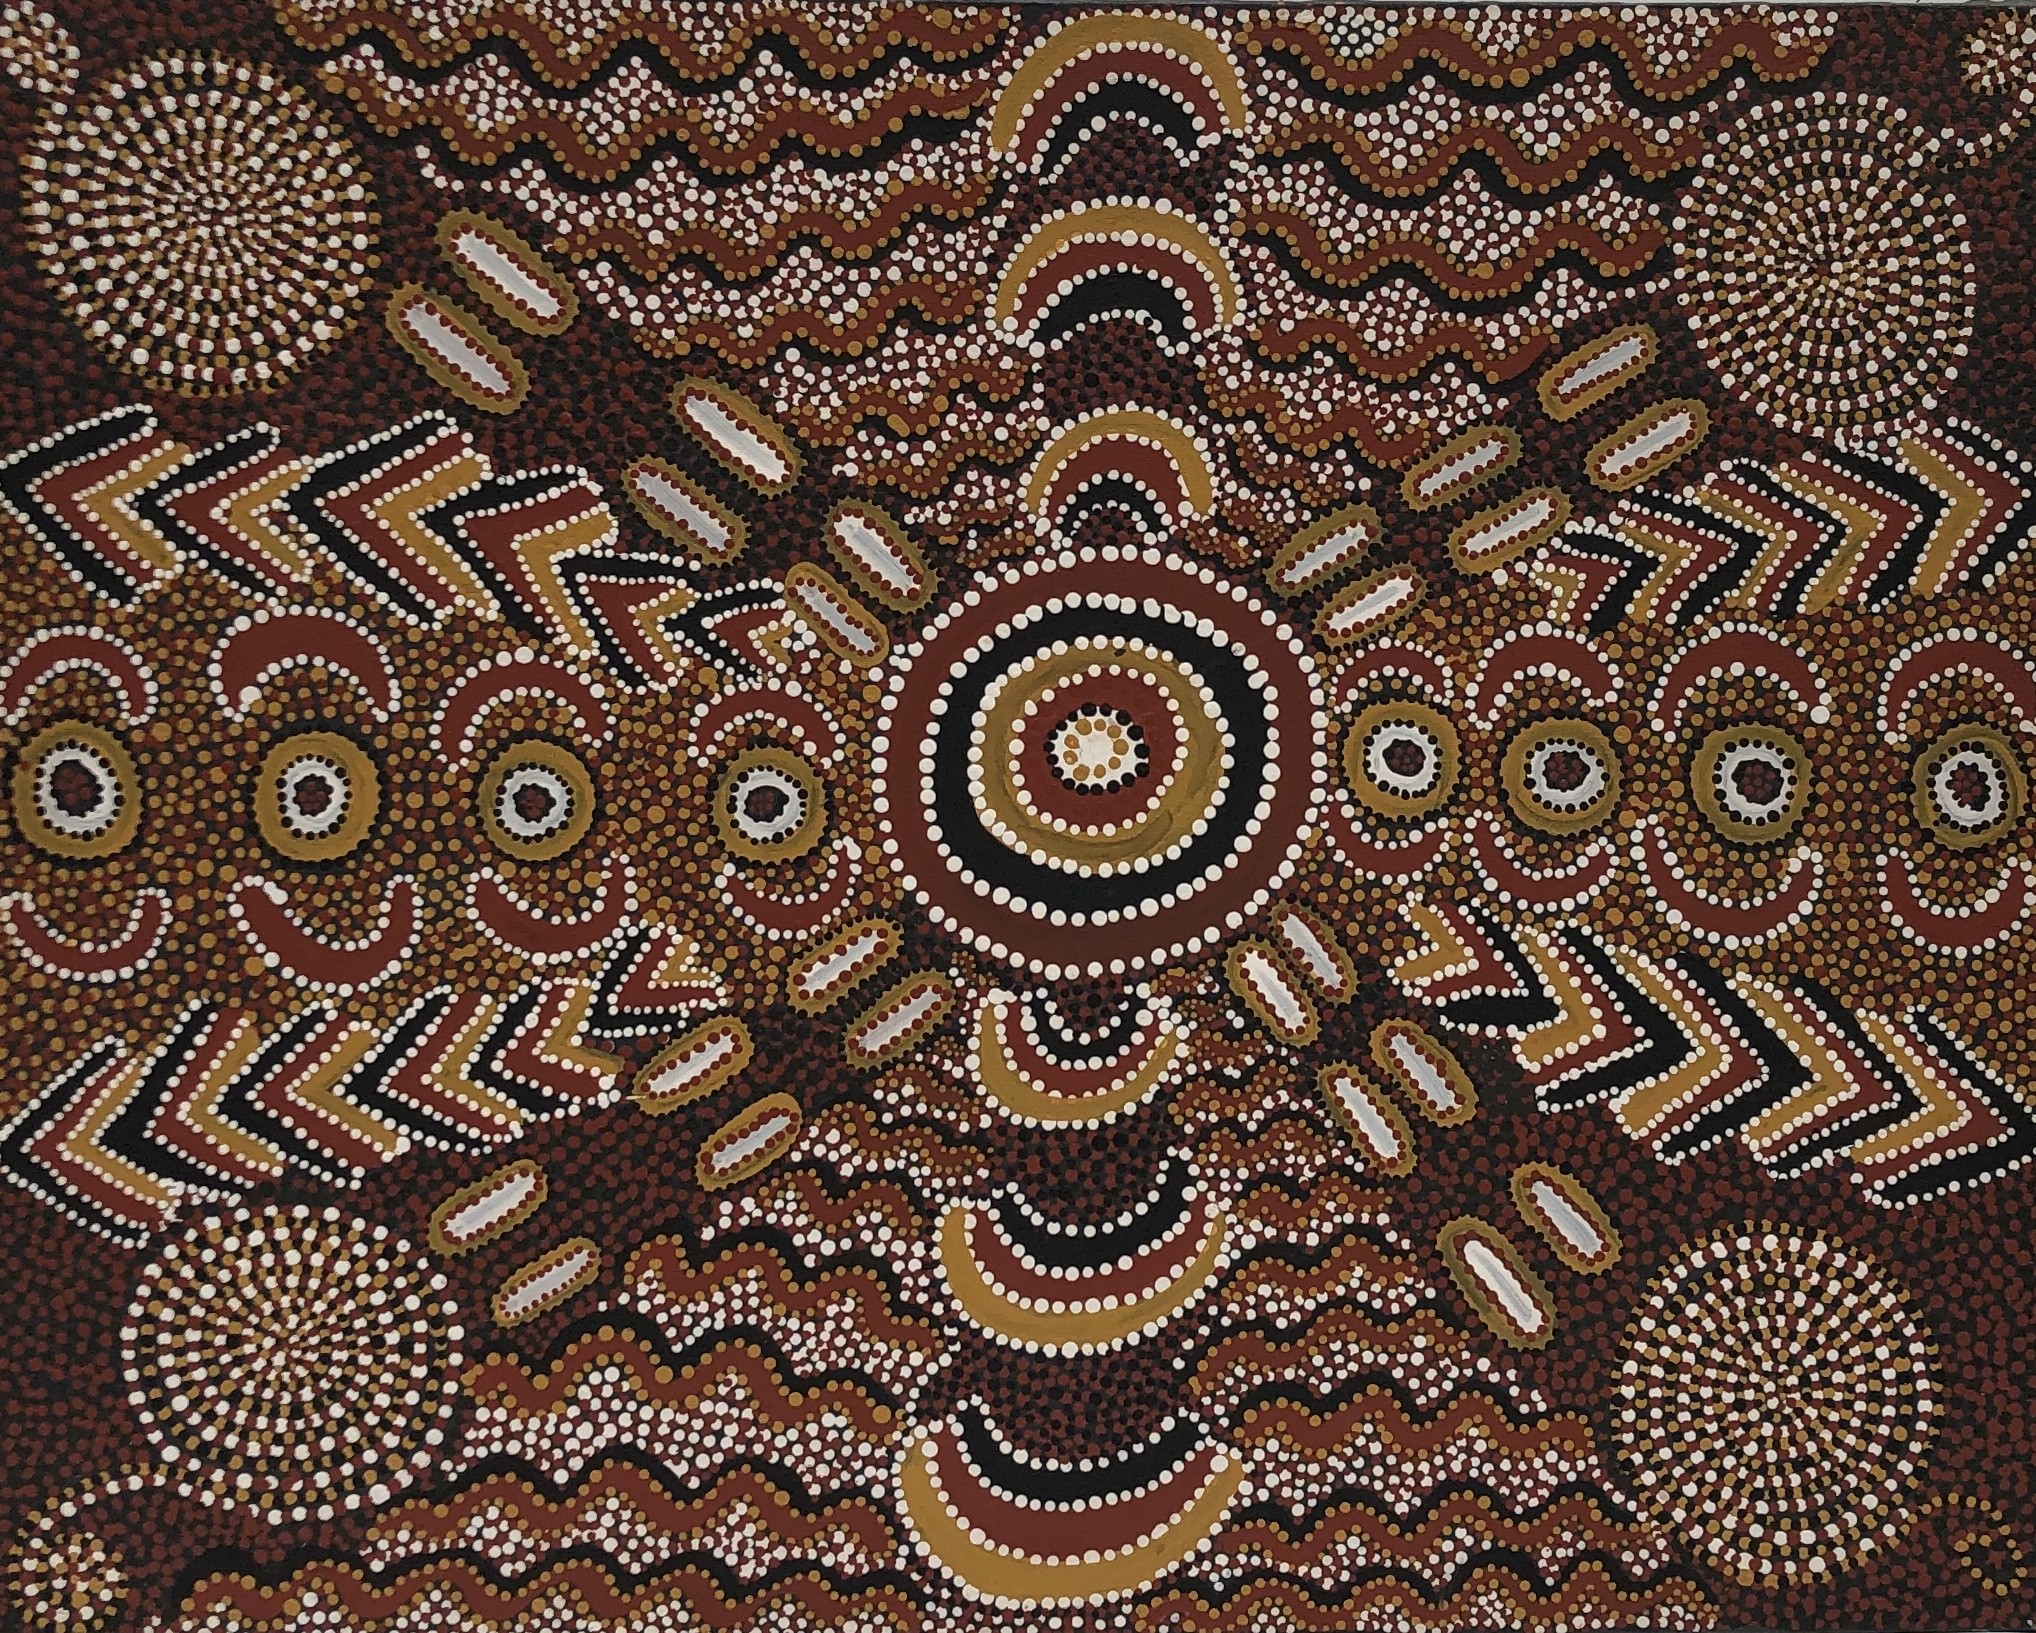 original-aboriginal-art